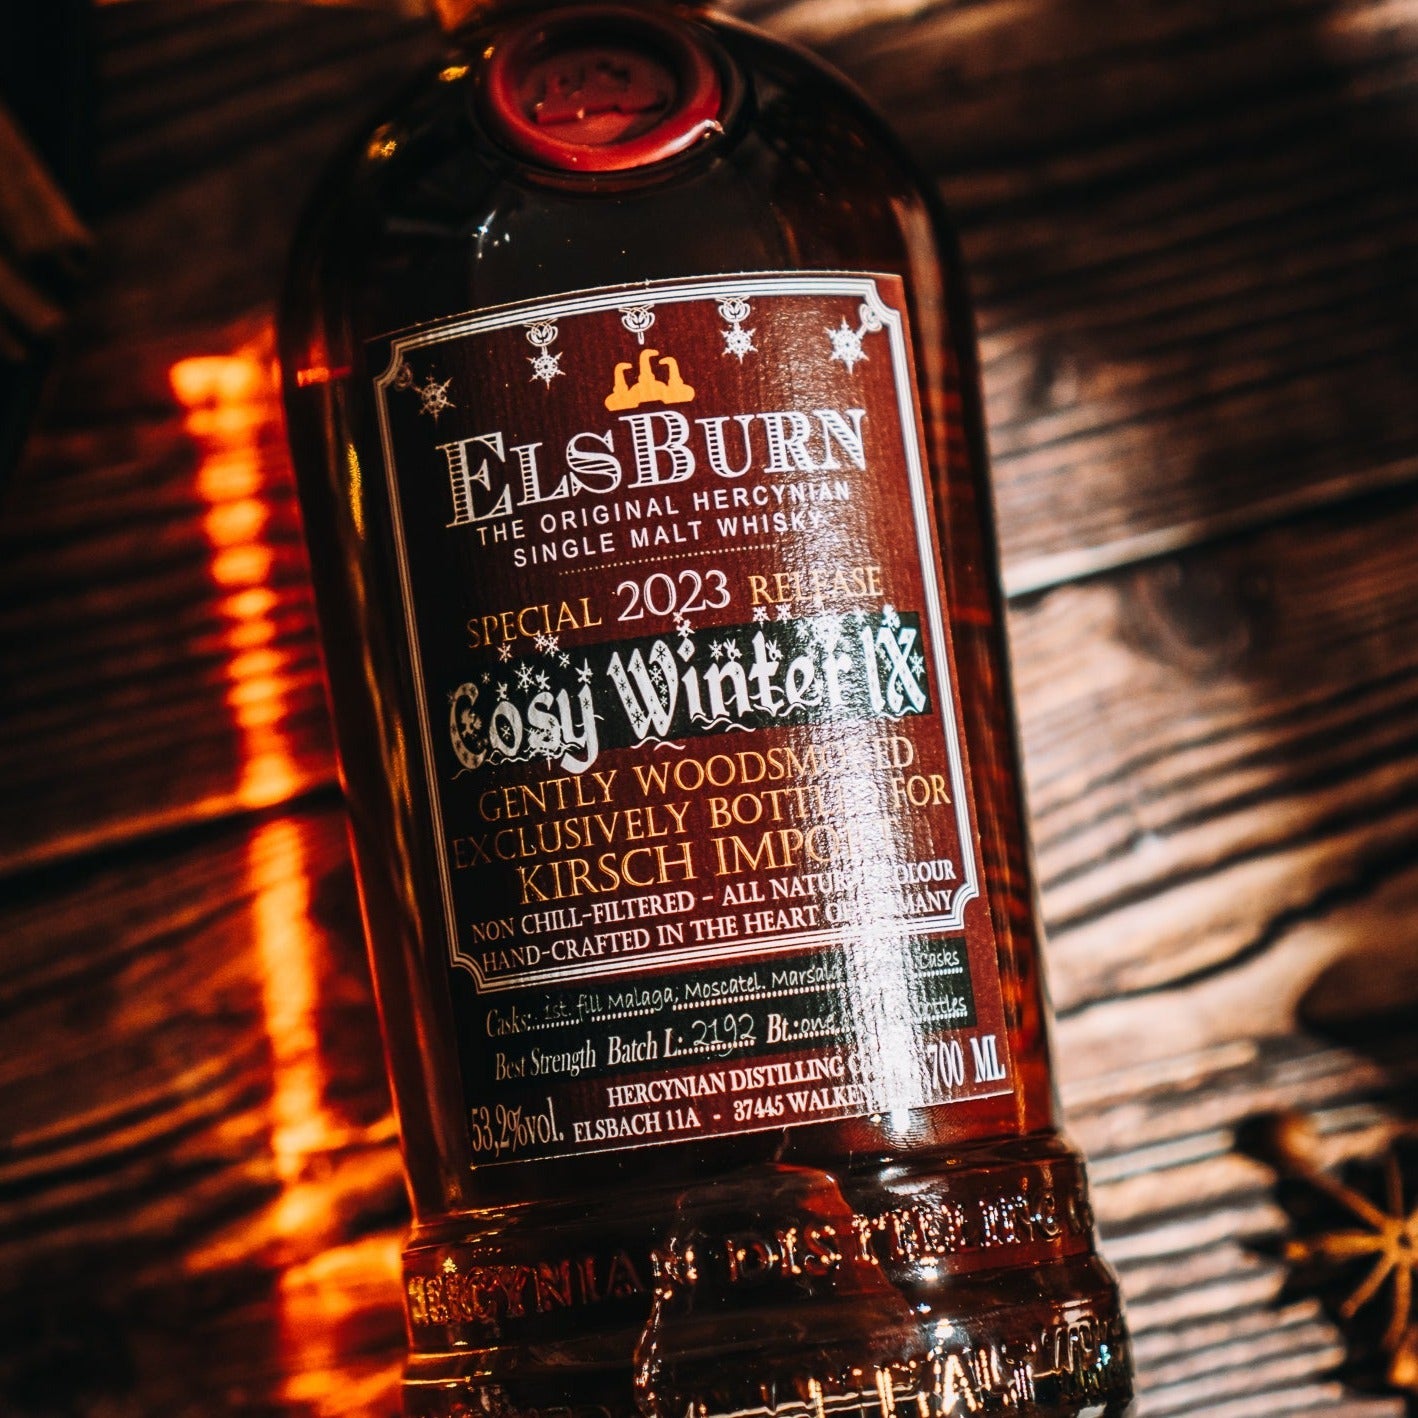 ElsBurn | Cosy Winter IX 2023 | German Whisky | 53,2%GET A BOTTLE